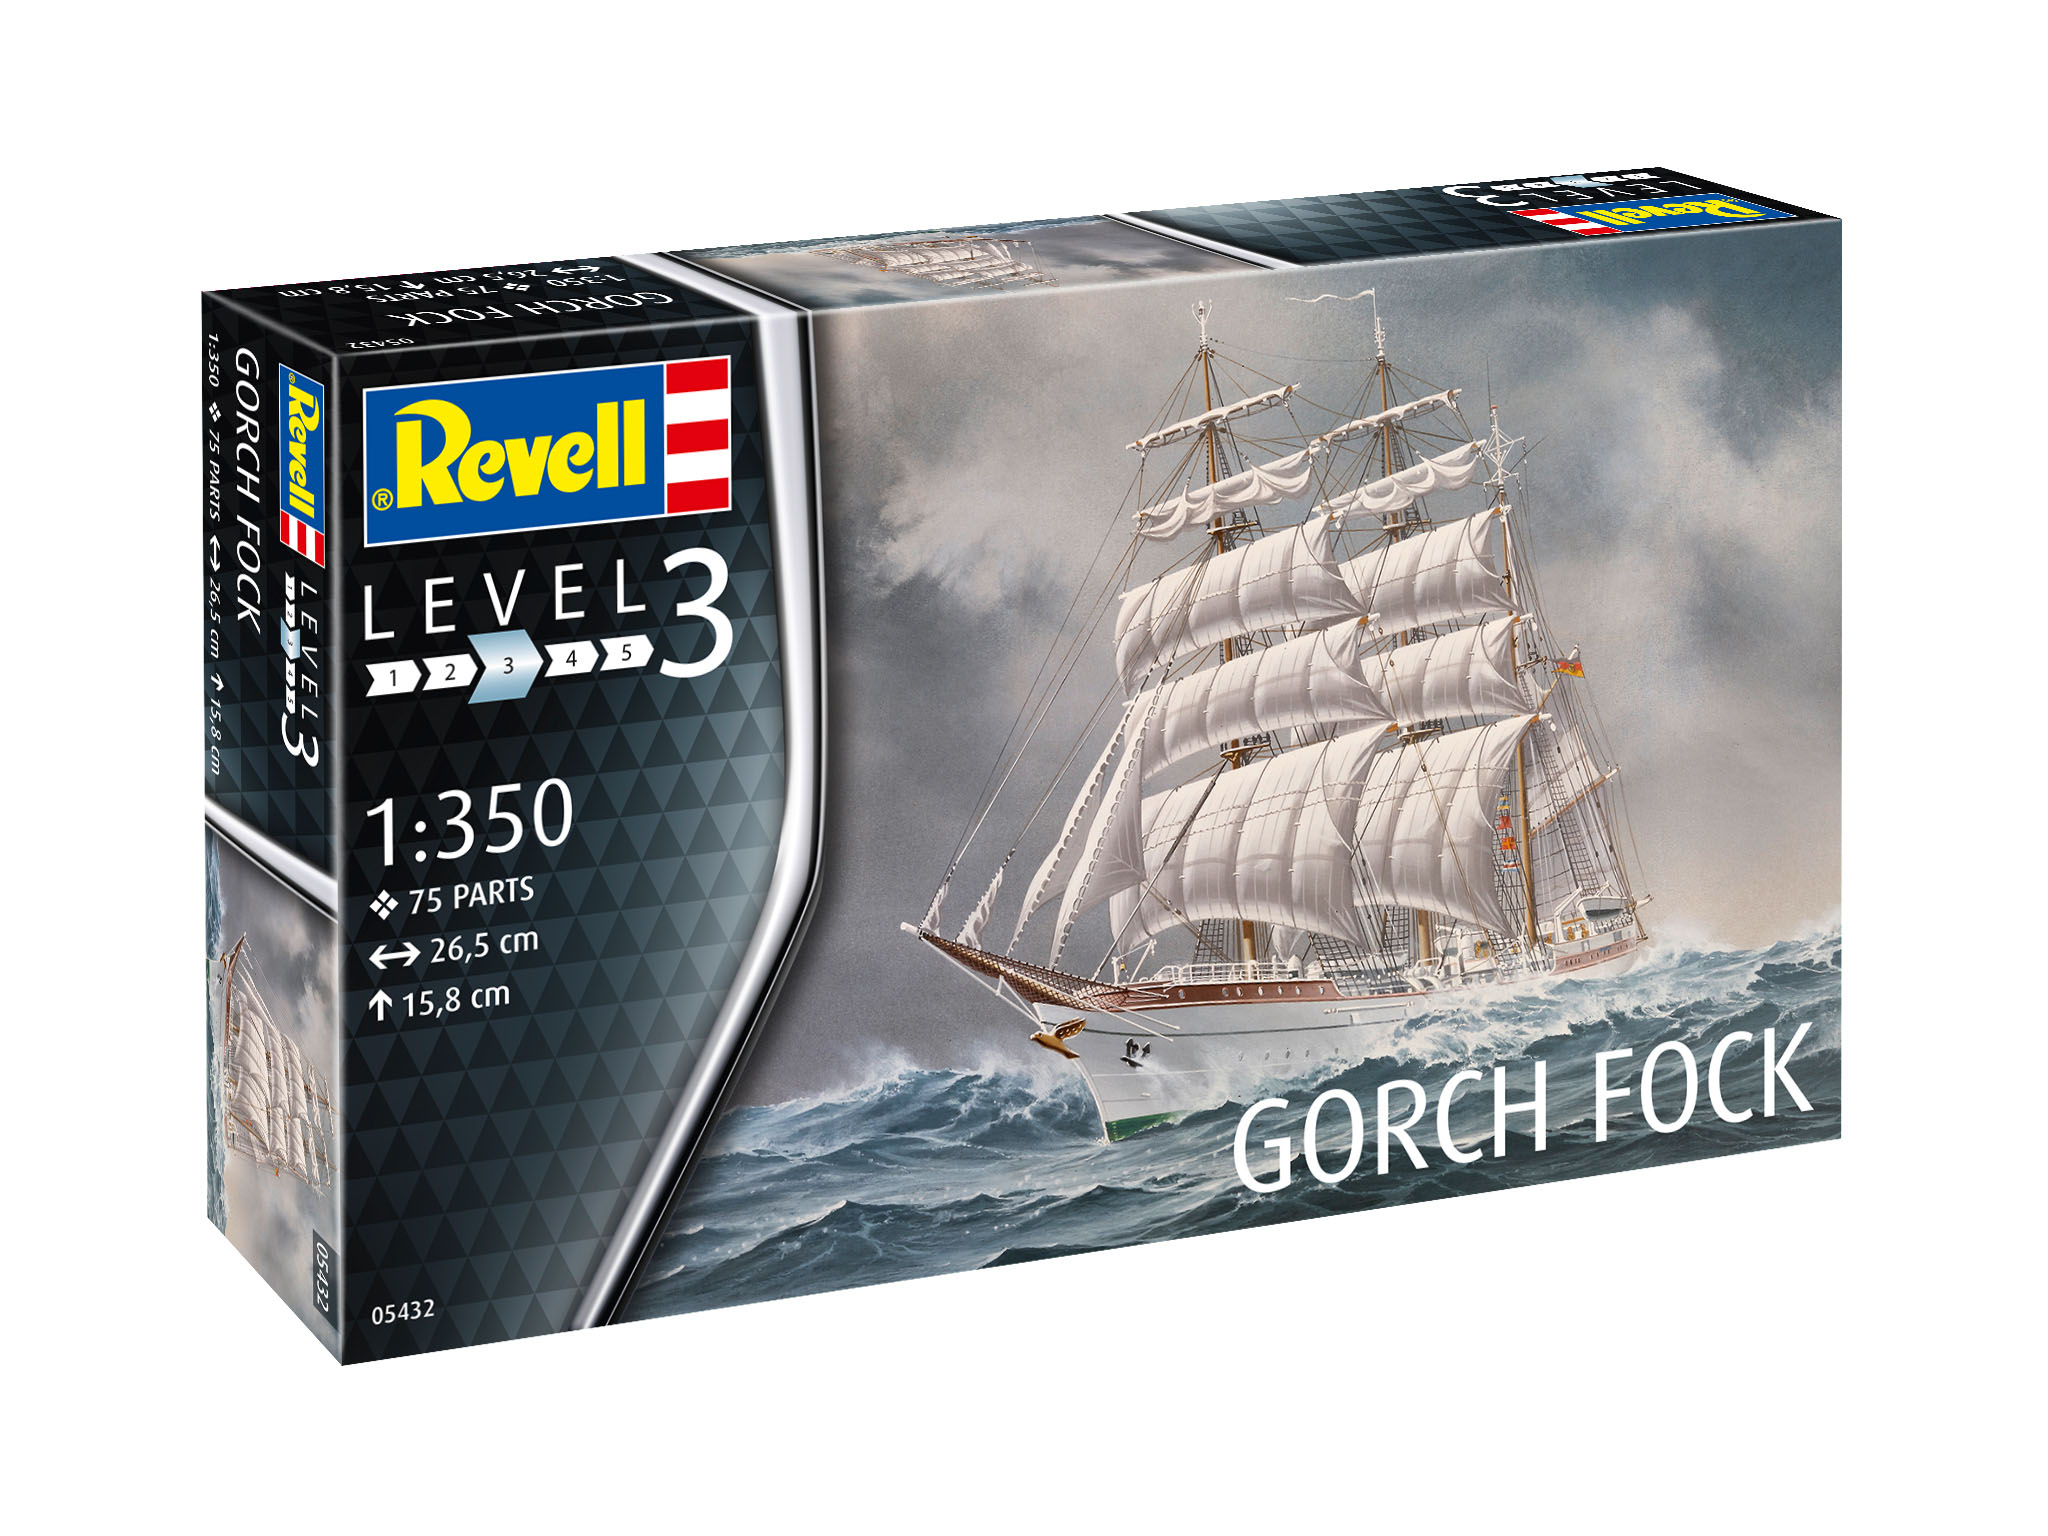 Gorch Fock - 05432